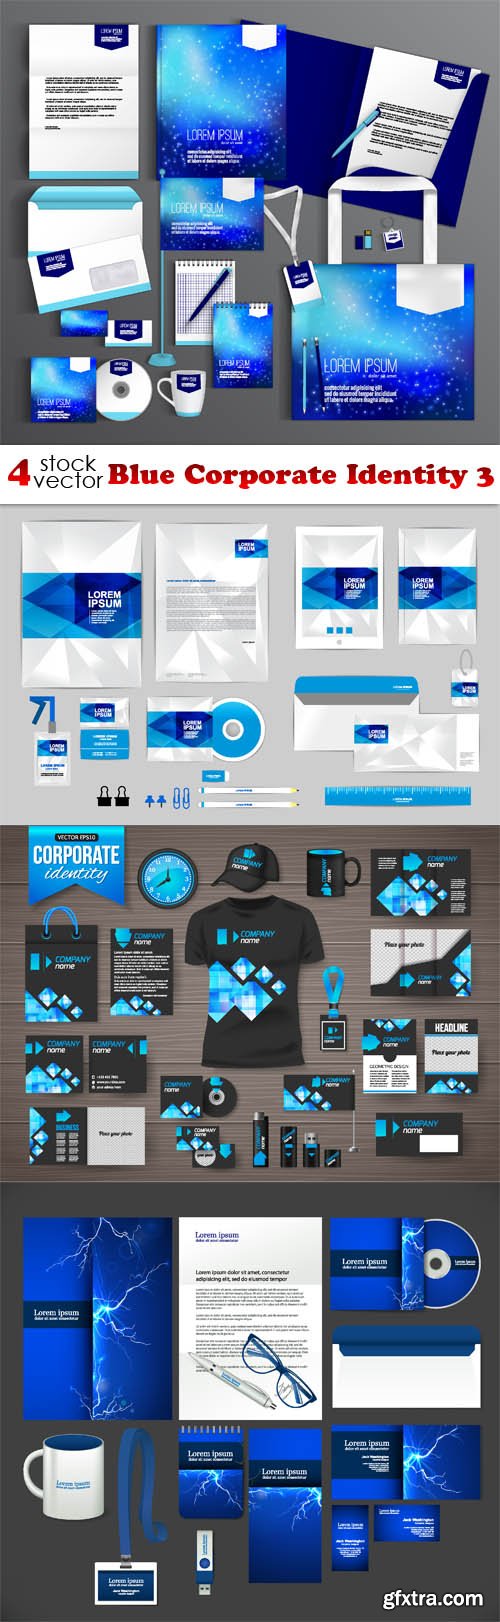 Vectors - Blue Corporate Identity 3